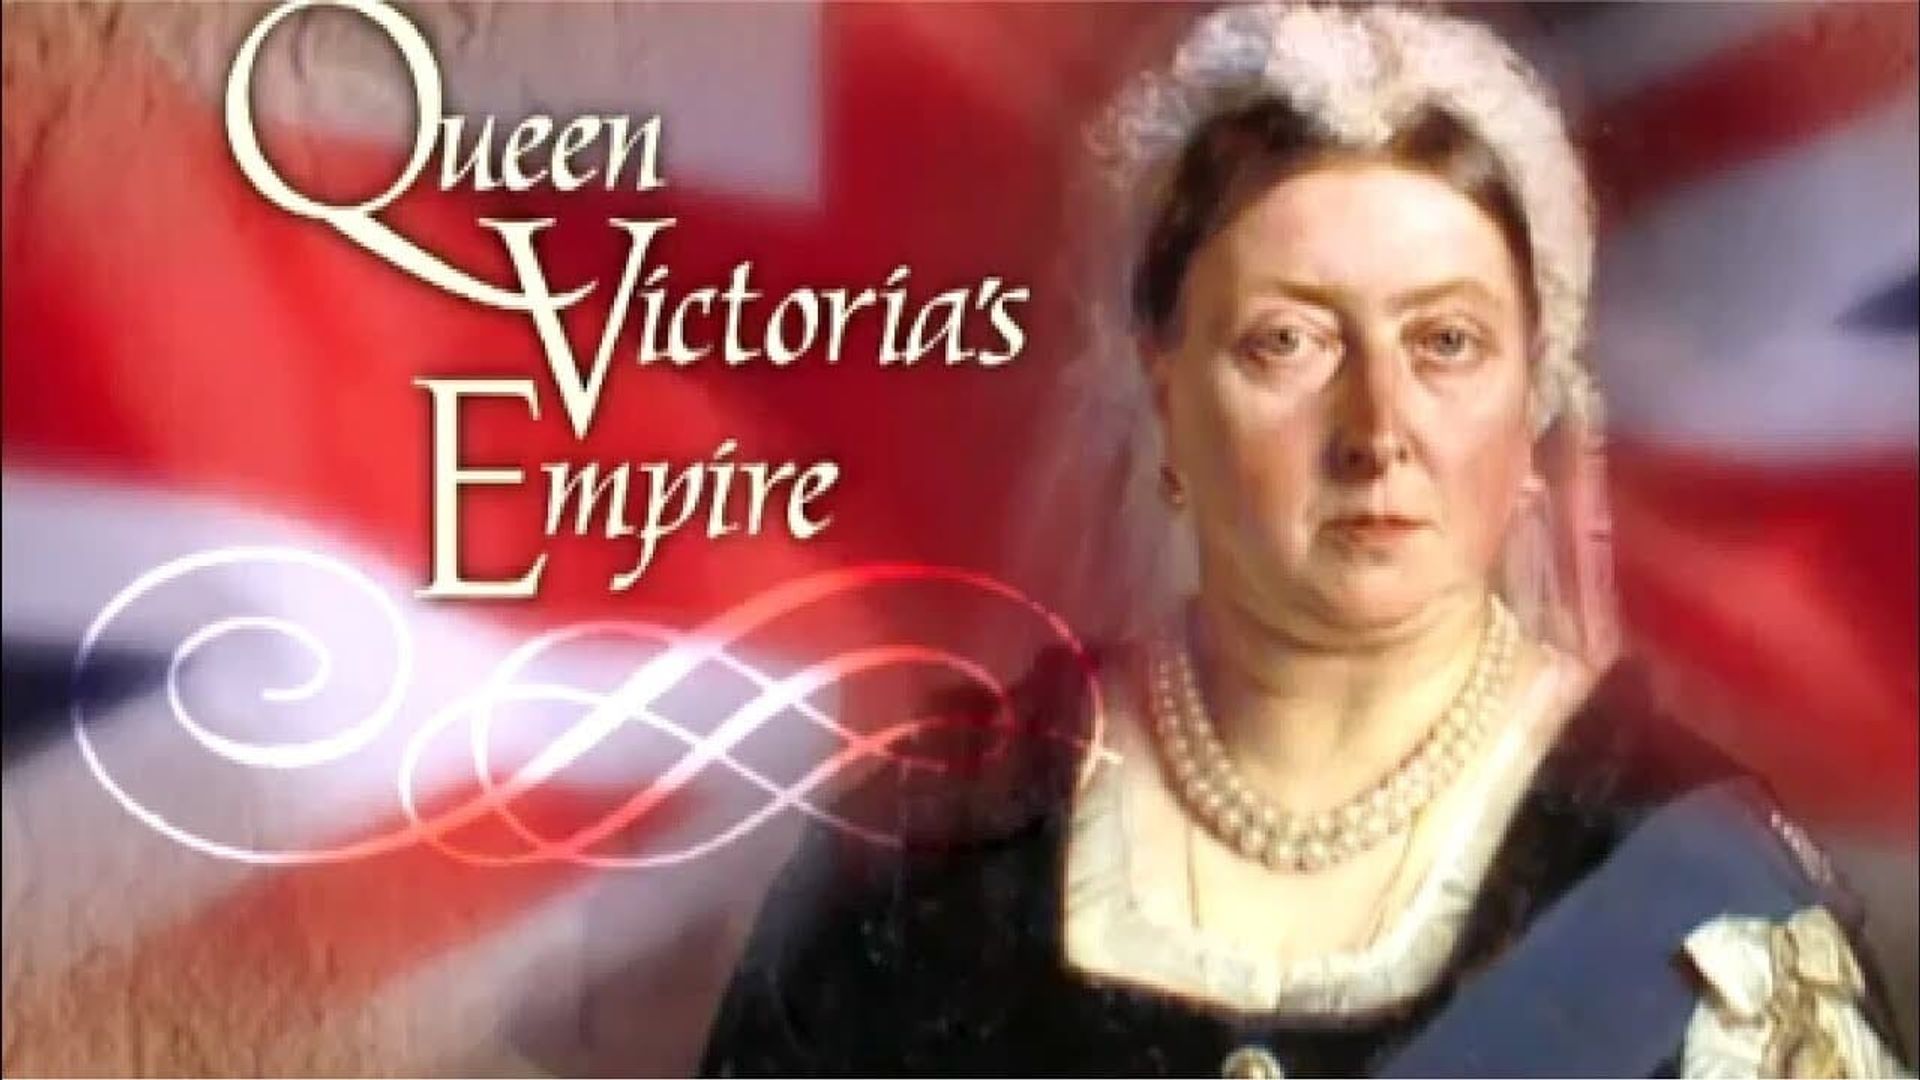 Queen Victoria's Empire background